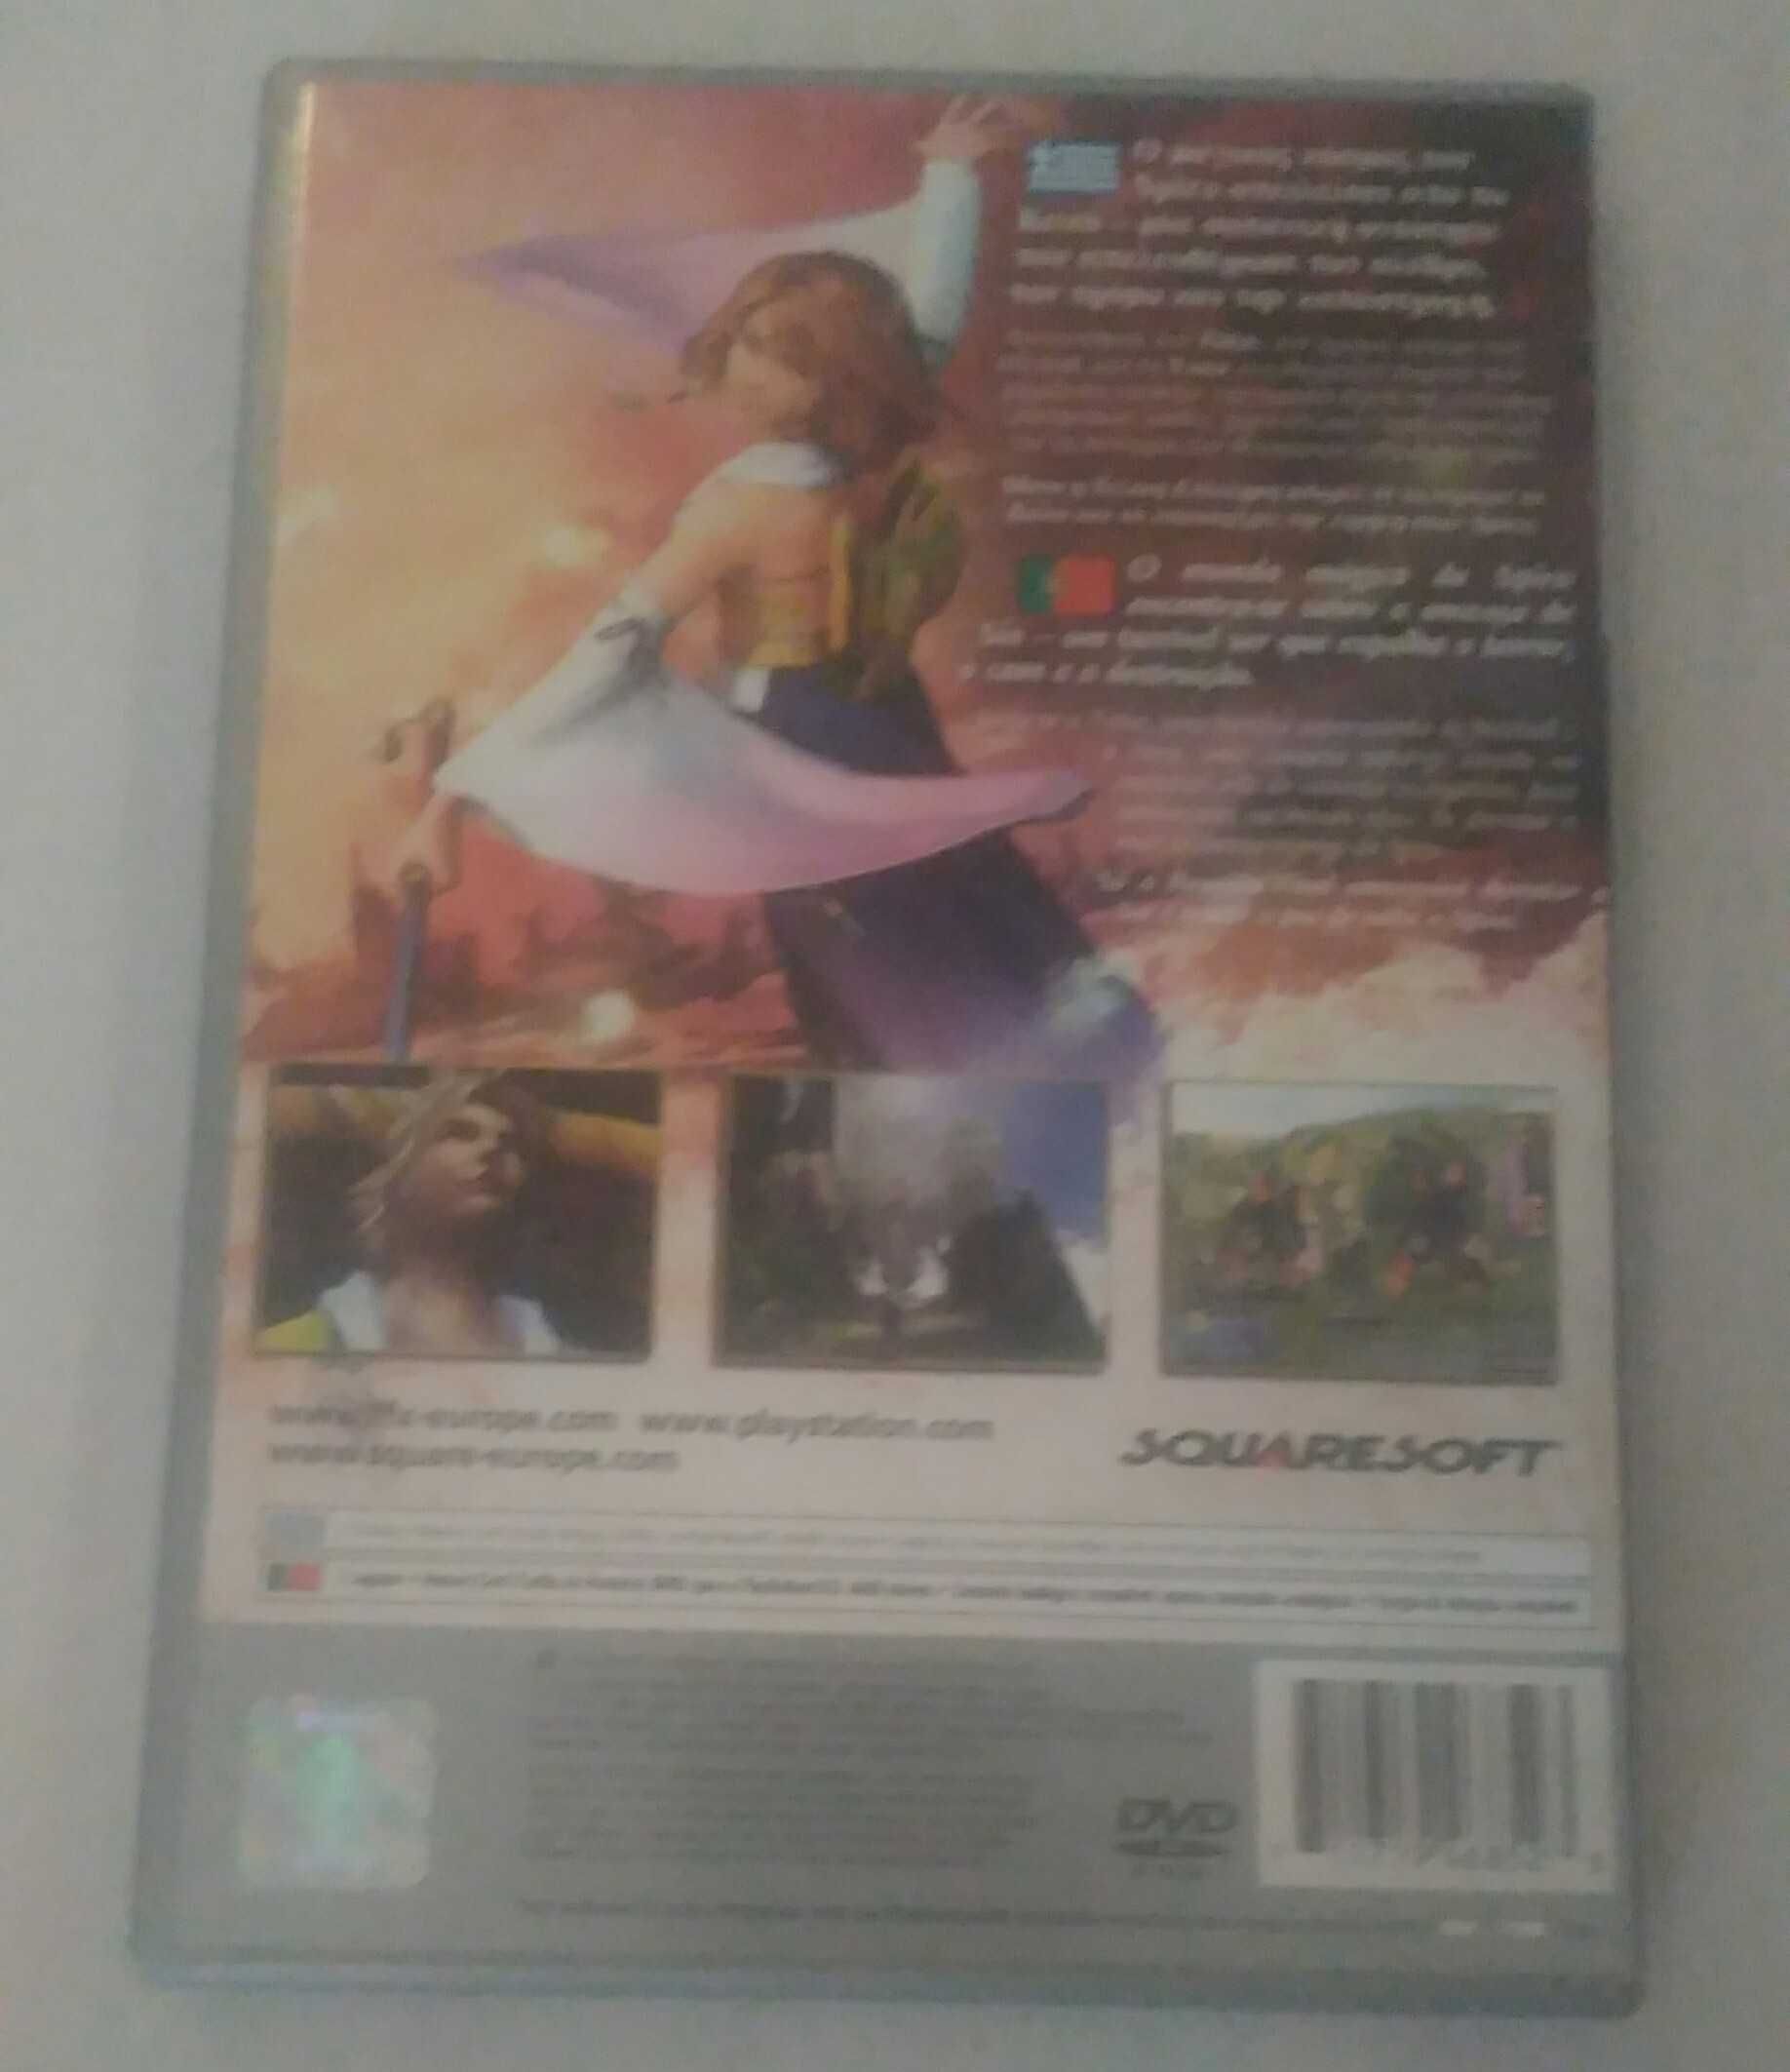 Final Fantasy X - Playstation 2